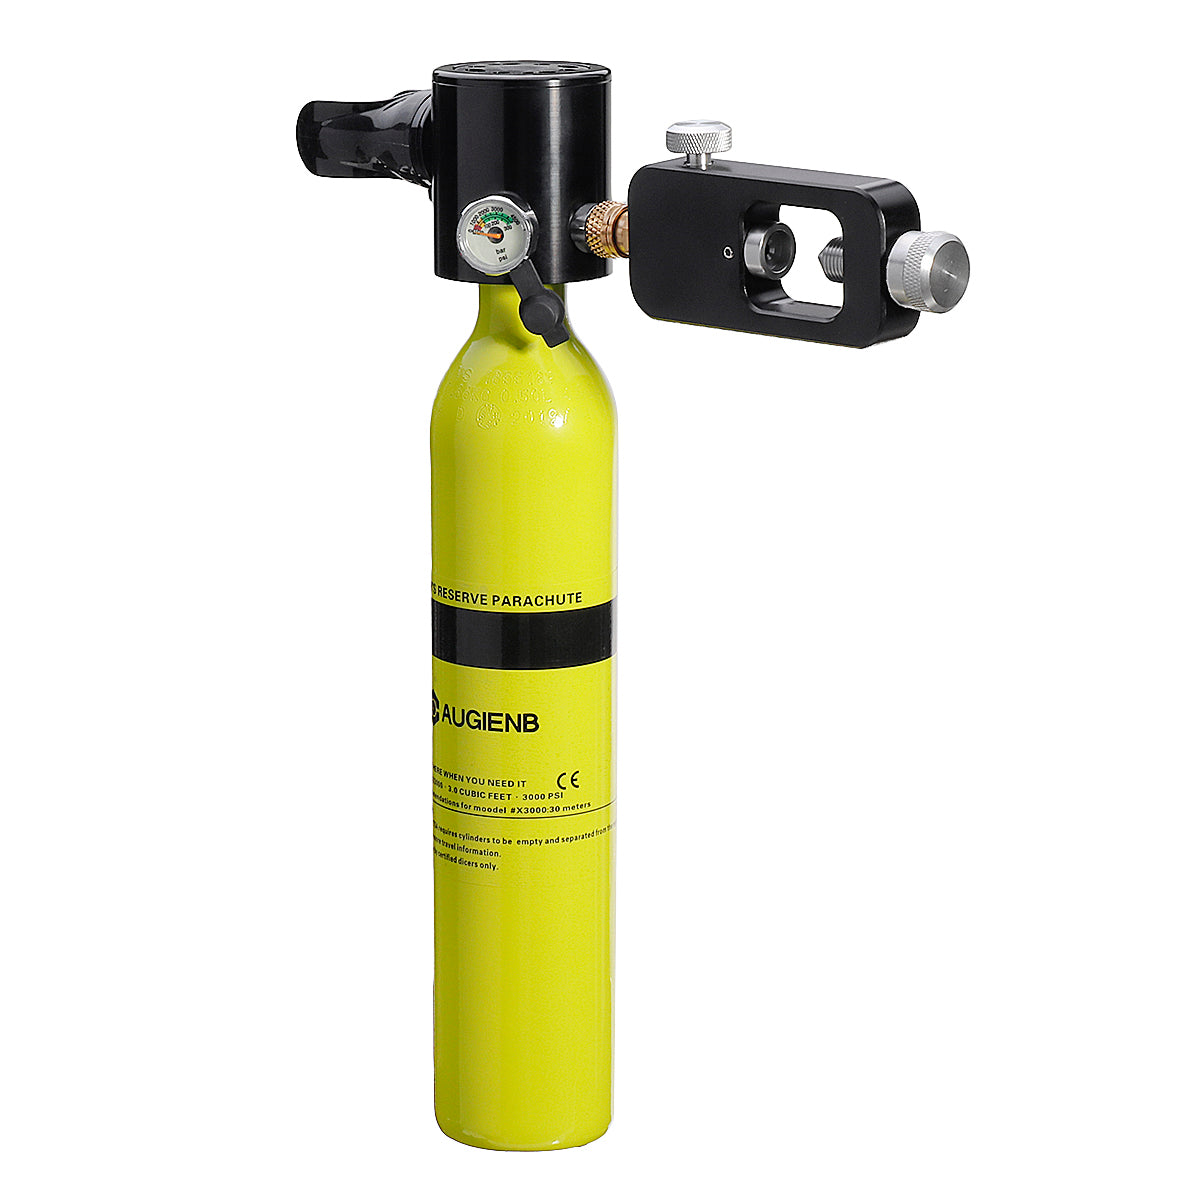 0.5L Scuba Oxygen Cylinder Underwater Diving Equipment  Adapter & Storage Bag